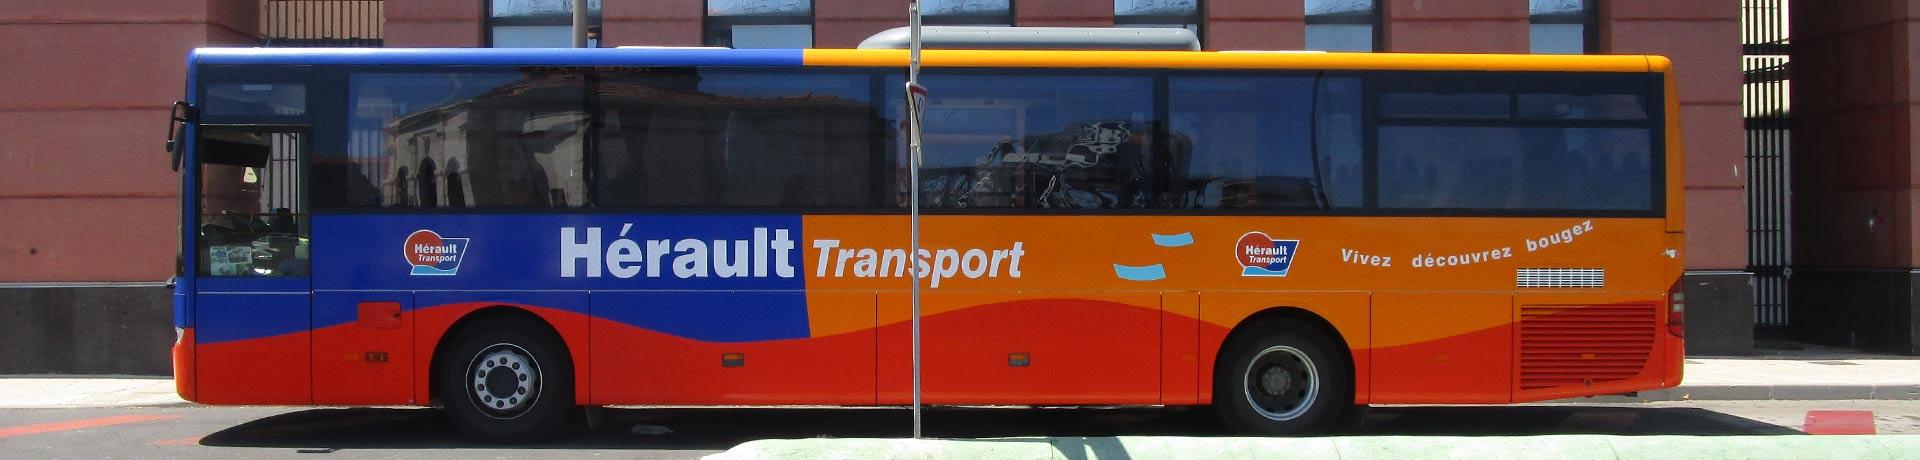 bus hérault transport